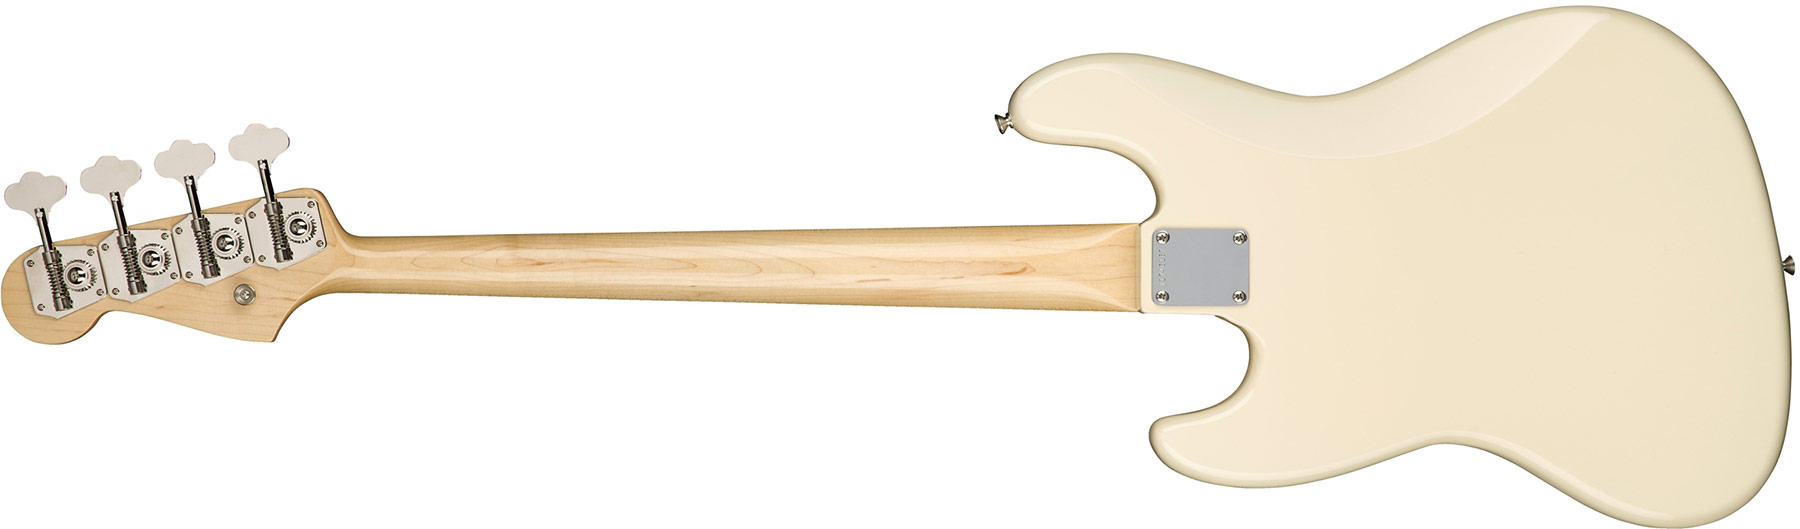 Fender Jazz Bass '60s American Original Usa Rw - Olympic White - Solid body elektrische bas - Variation 2